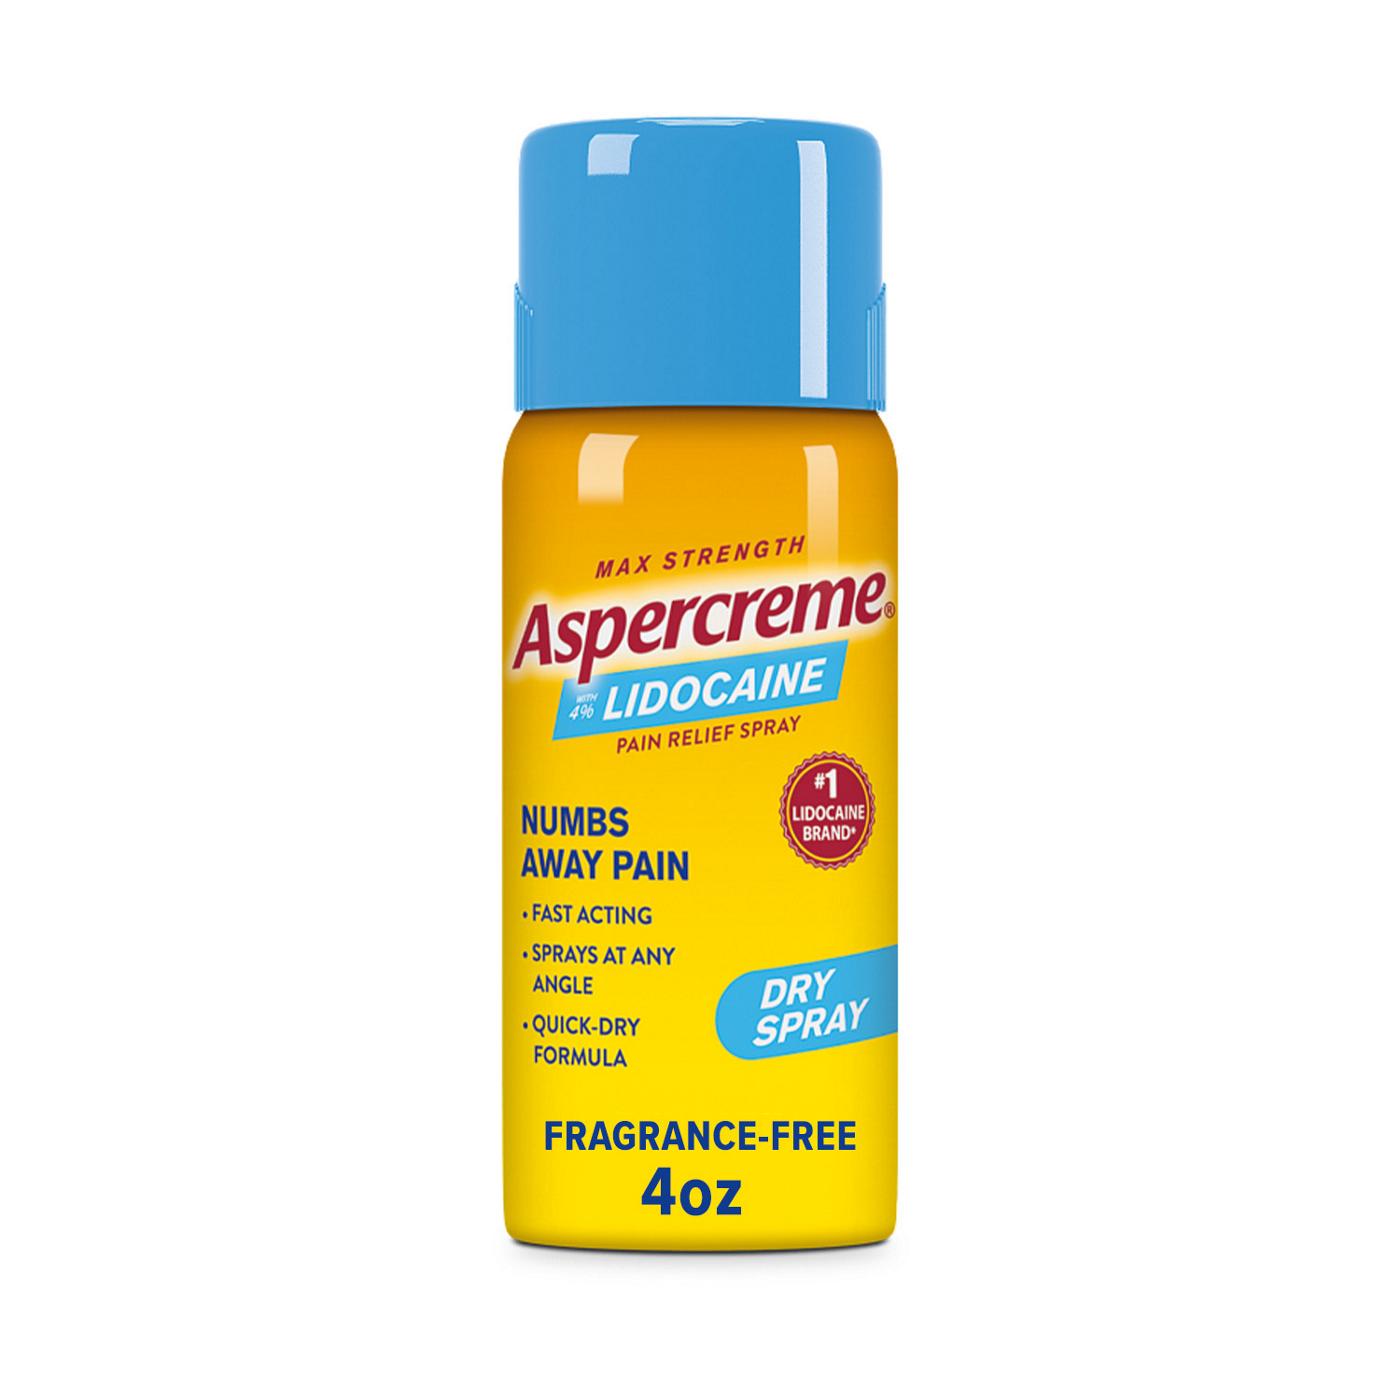 Aspercreme Lidocaine Pain Relief Dry Spray; image 1 of 8